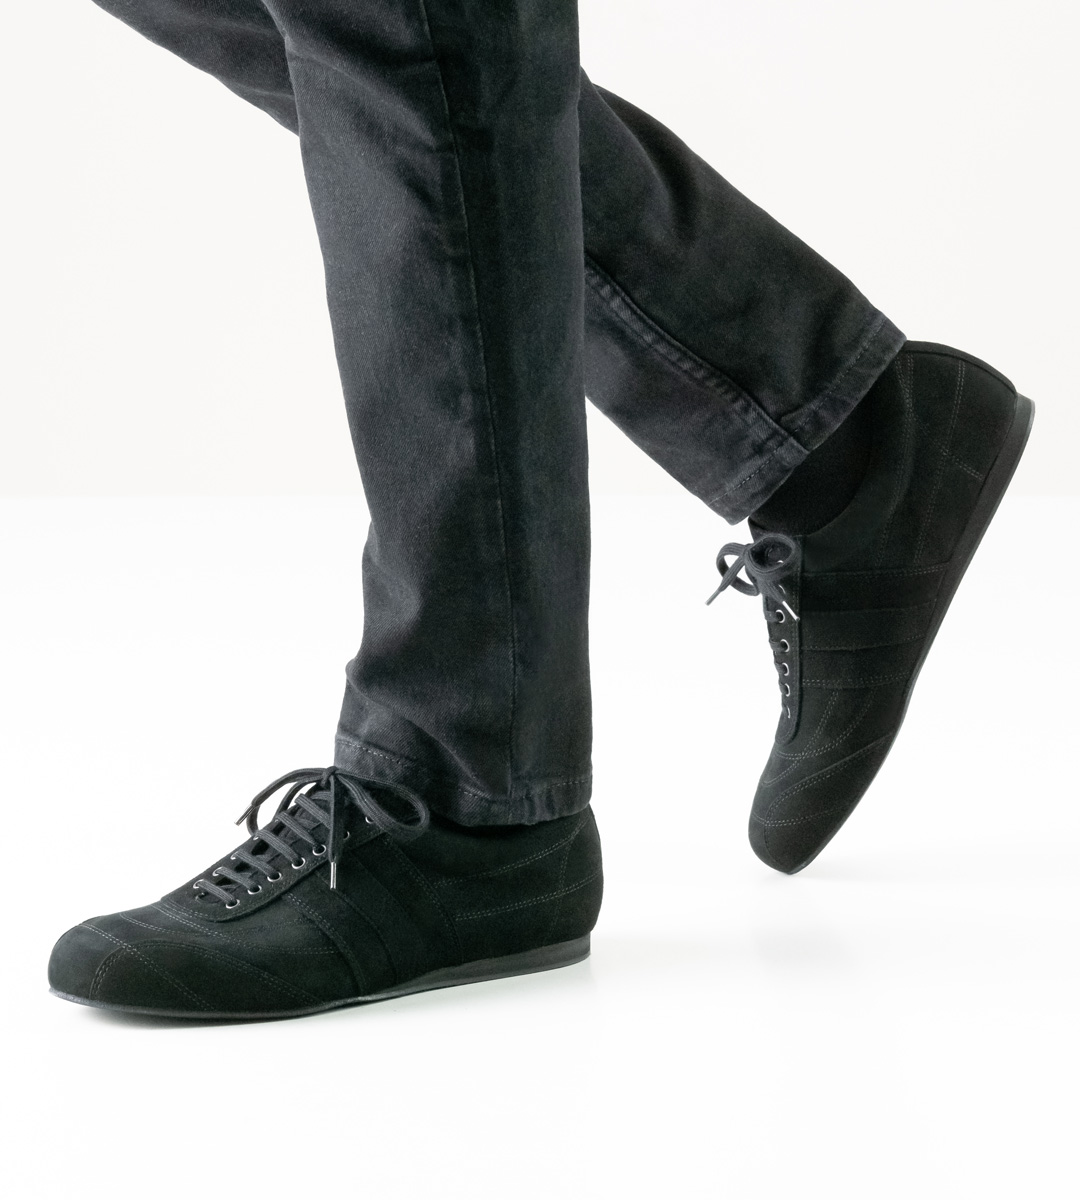 black men's dance shoe Sneaker by Werner Kern for loose insoles